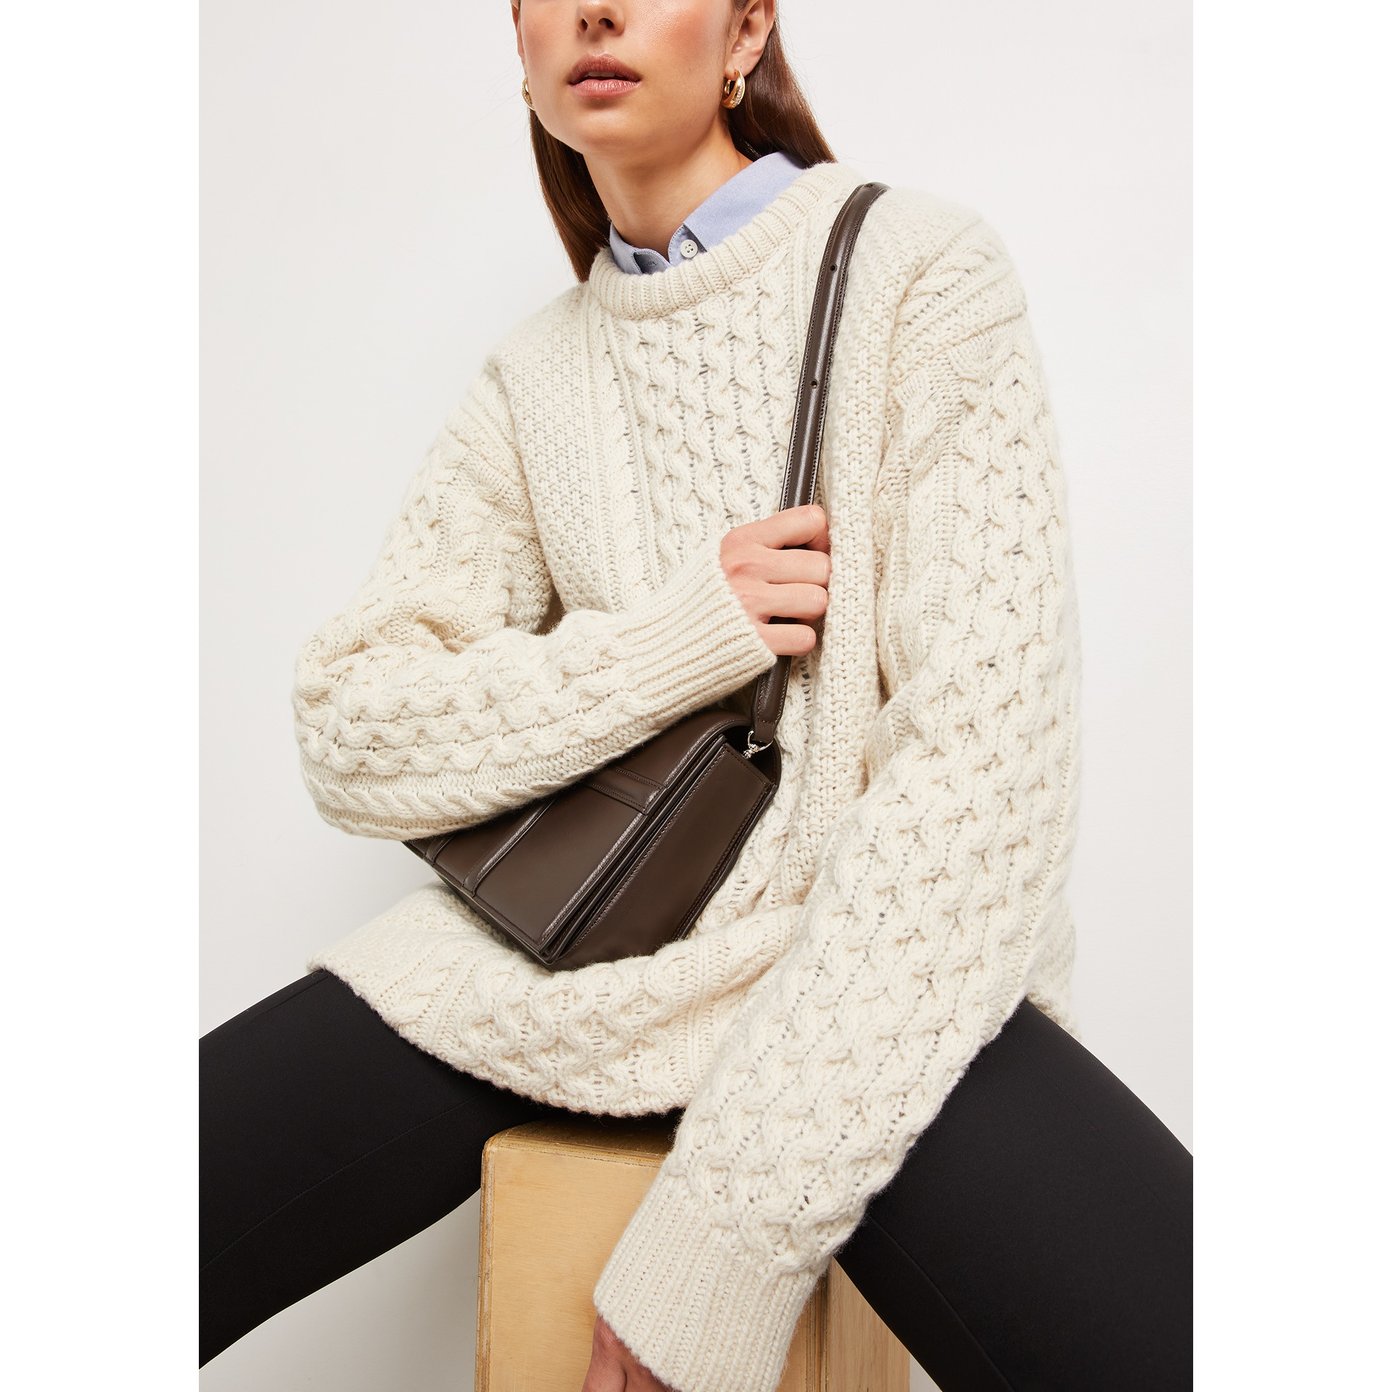 LA COOL & CHIC  Knitwear fashion, Cable knit sweaters, Minimalist